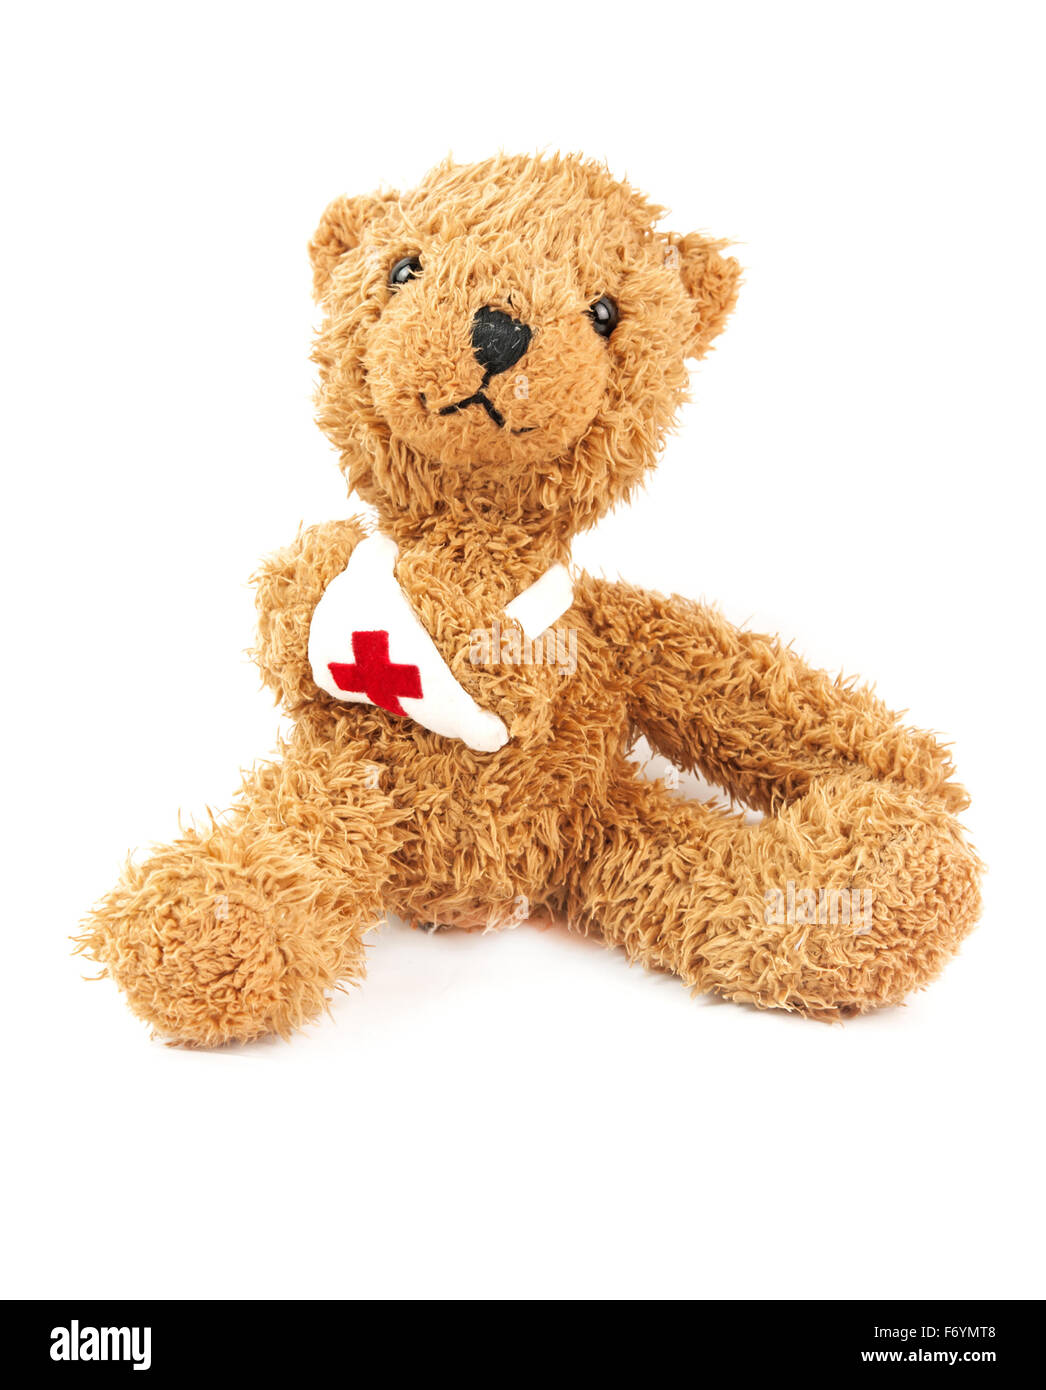 Broken Arm Teddy Bear 